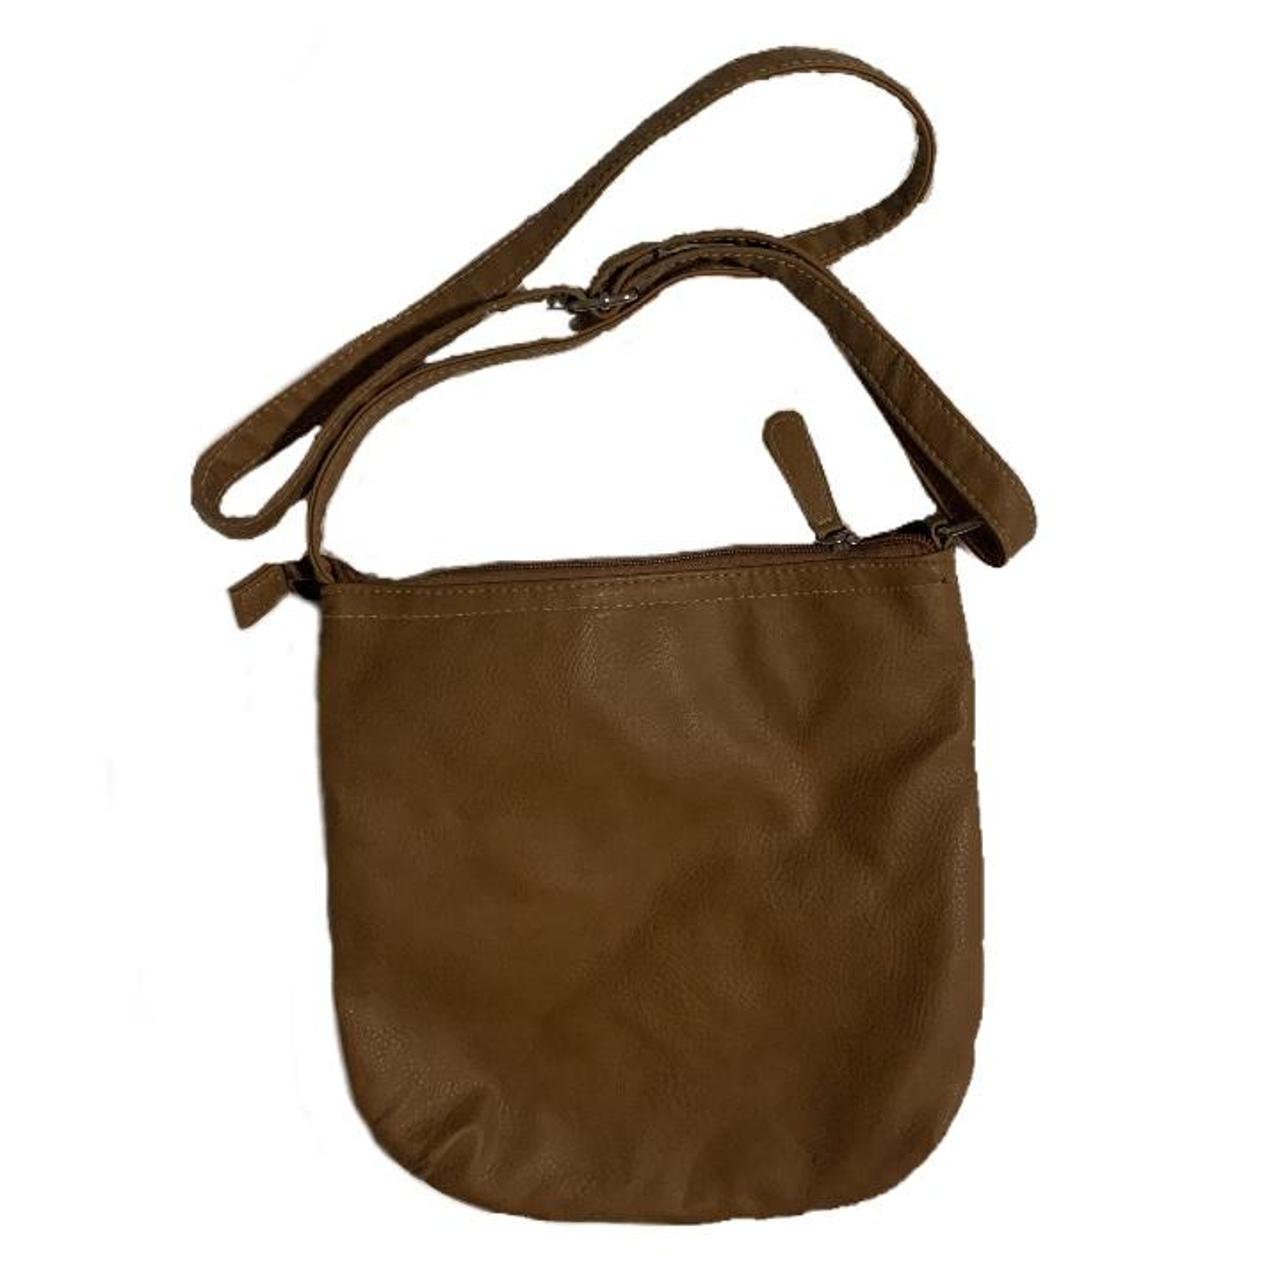 Croft & Barrow Women's Tan Bag (2)